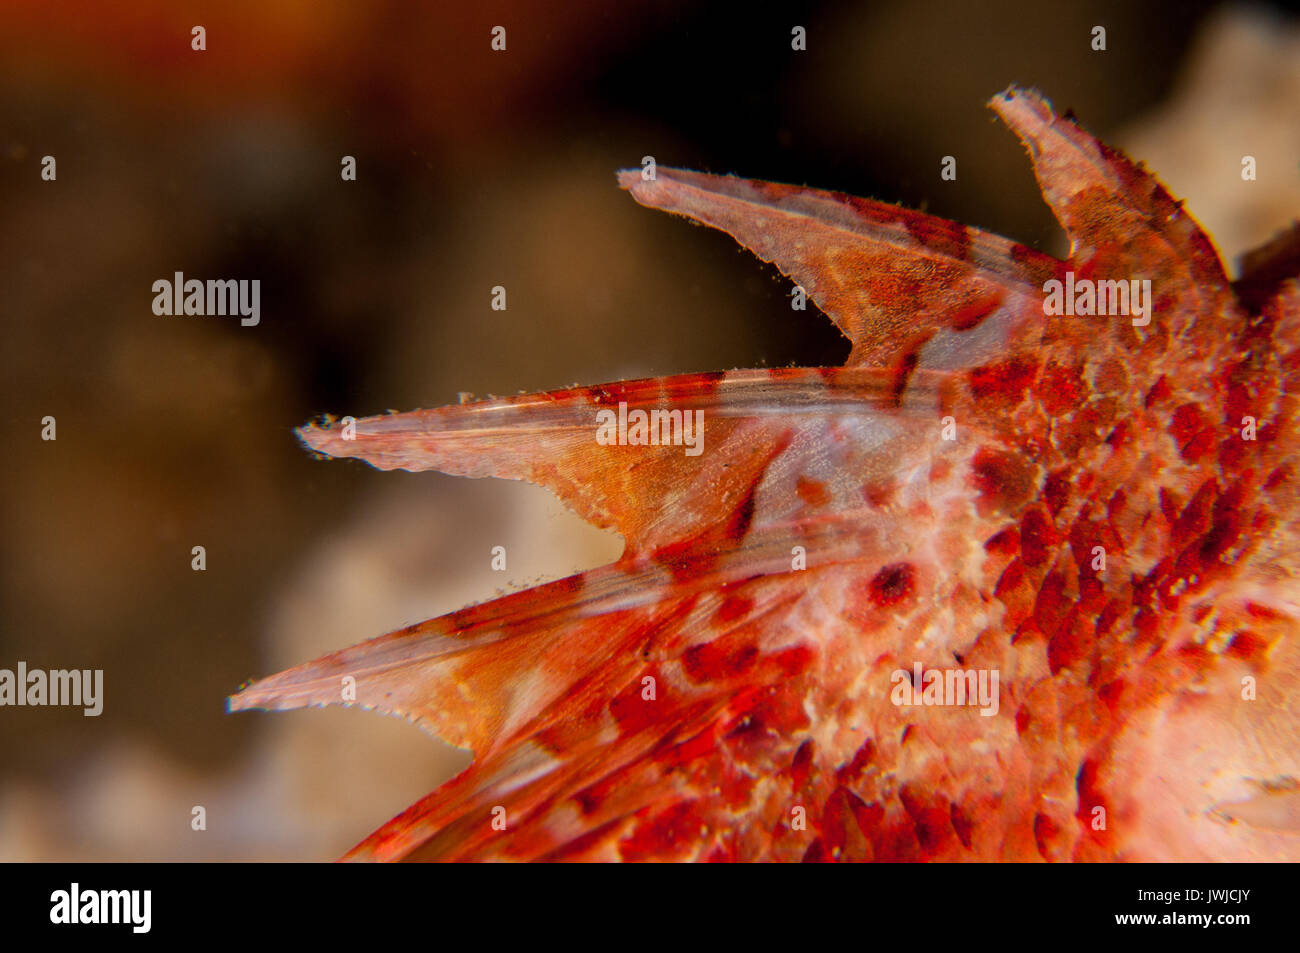 close-up view of the dorsal fin of a Small red scorpionfish (Scorpaena notata), L'escala, Costa Brava, Catalonia, Spain Stock Photo